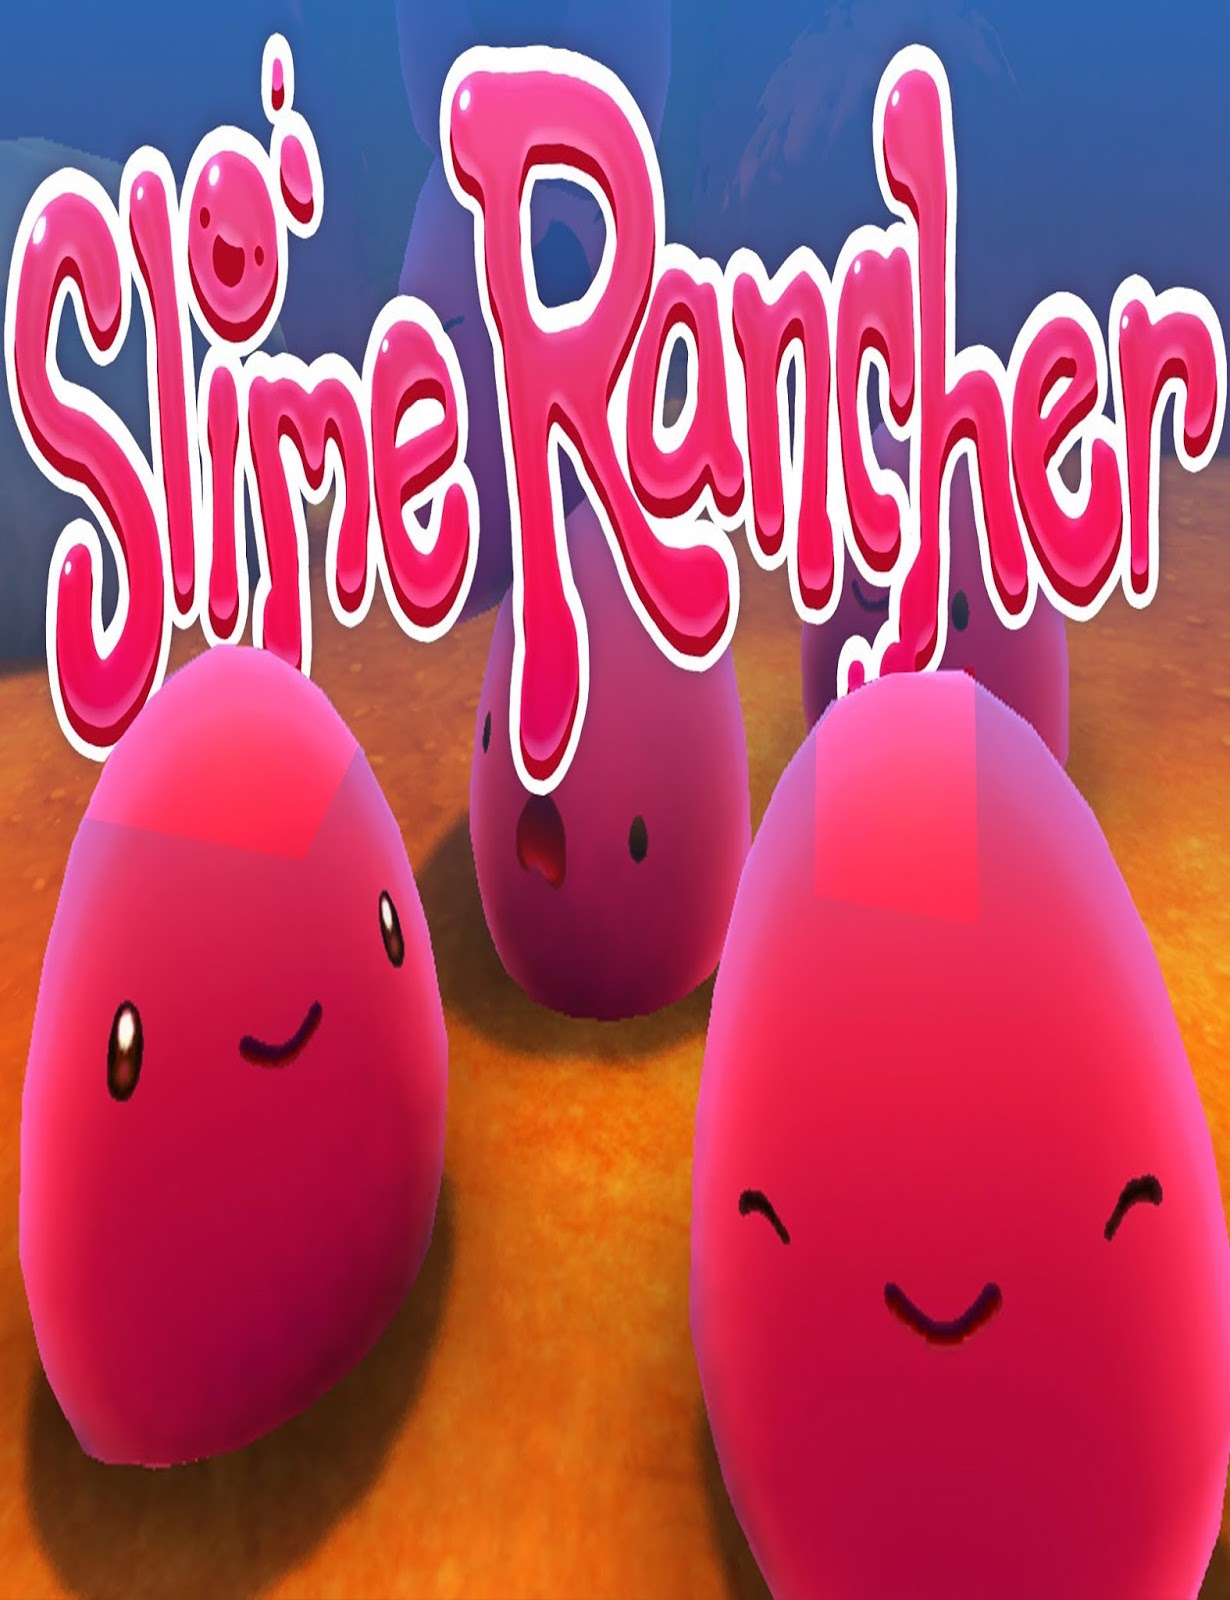 slime rancher free download version 0.3.0